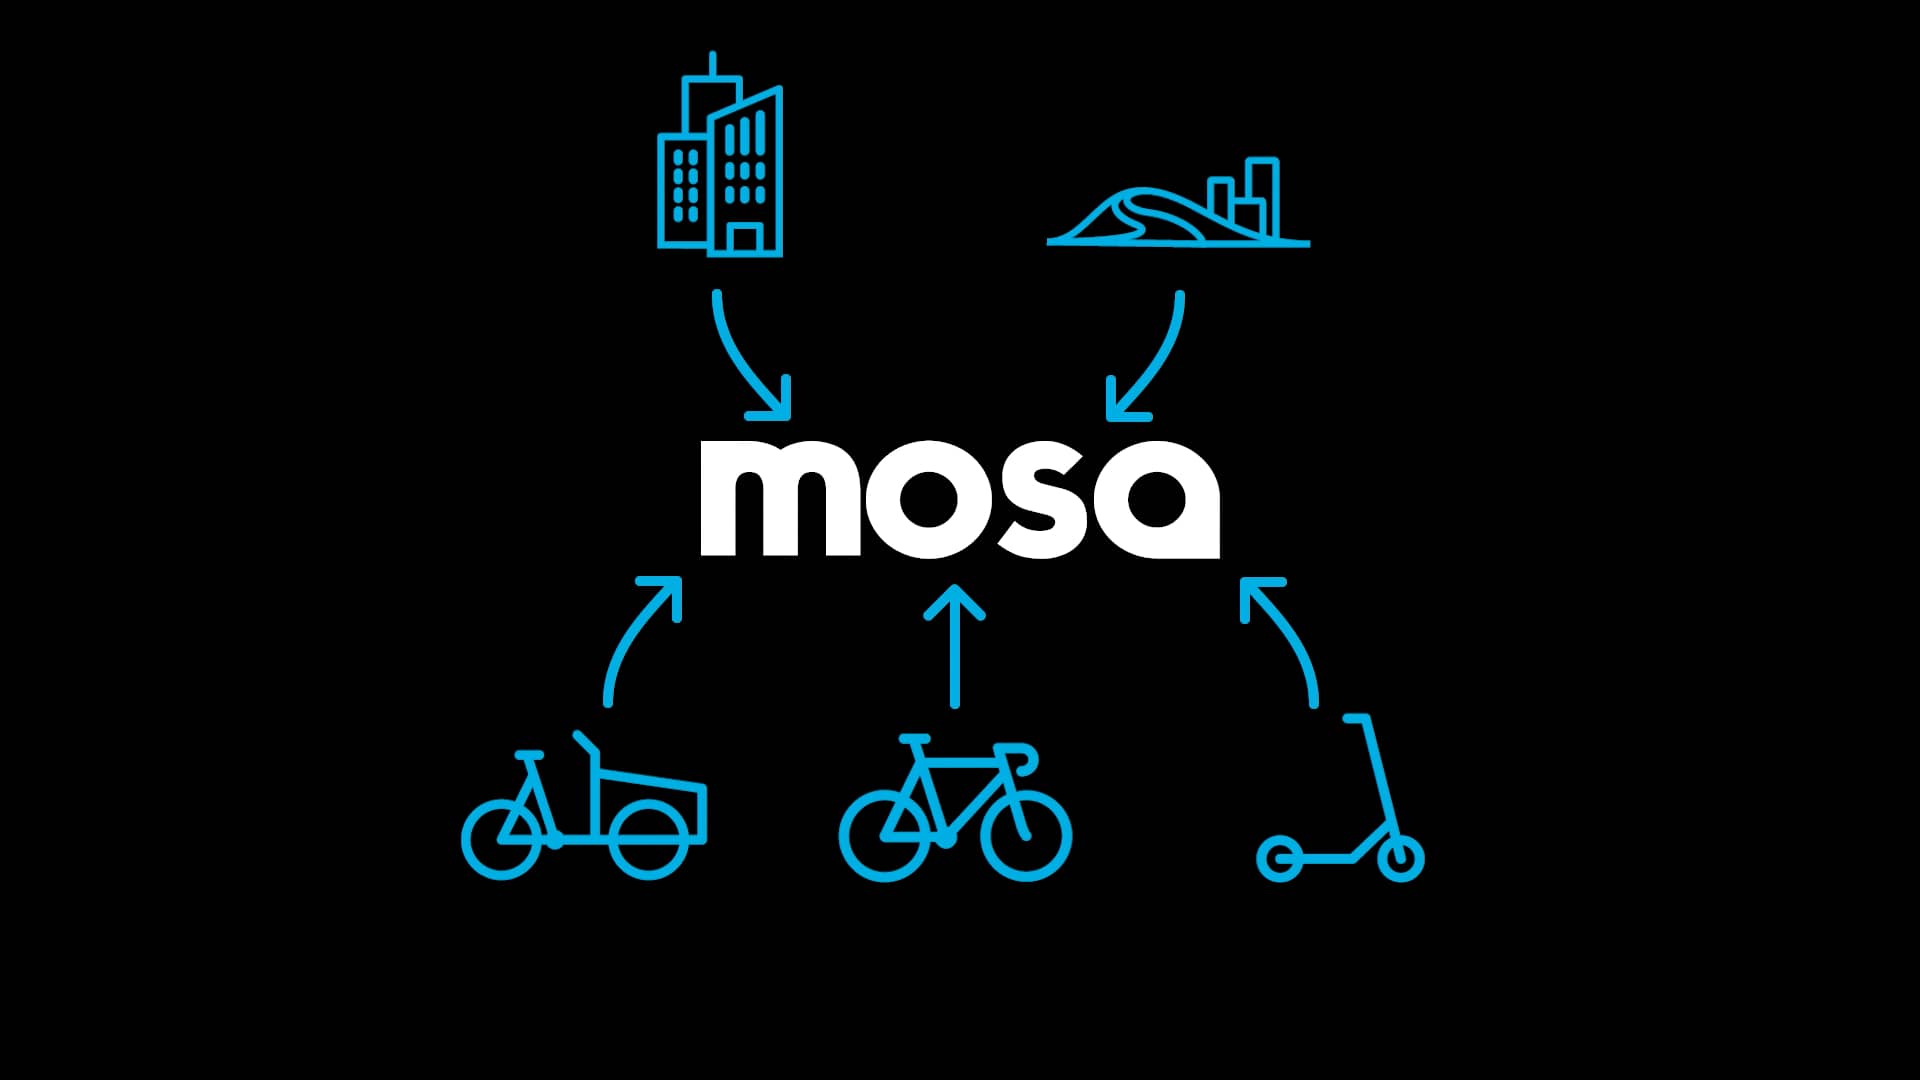 Full MOSA Demo 2022 on Vimeo